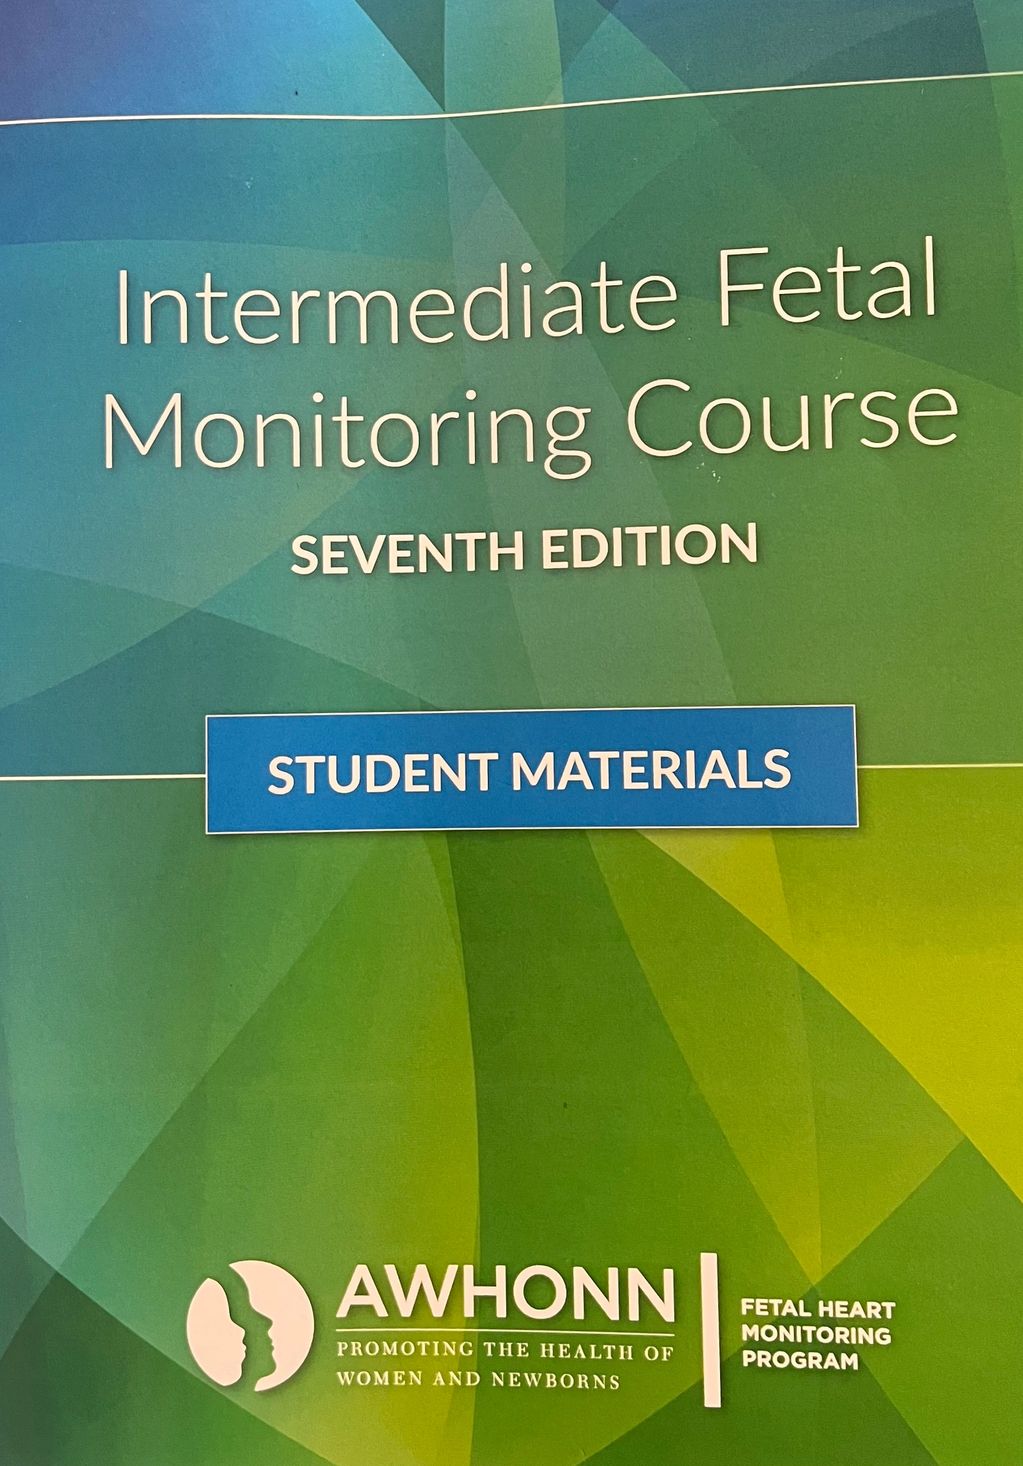 Intermediate Fetal Monitoring Course Student Materials Printed book. 